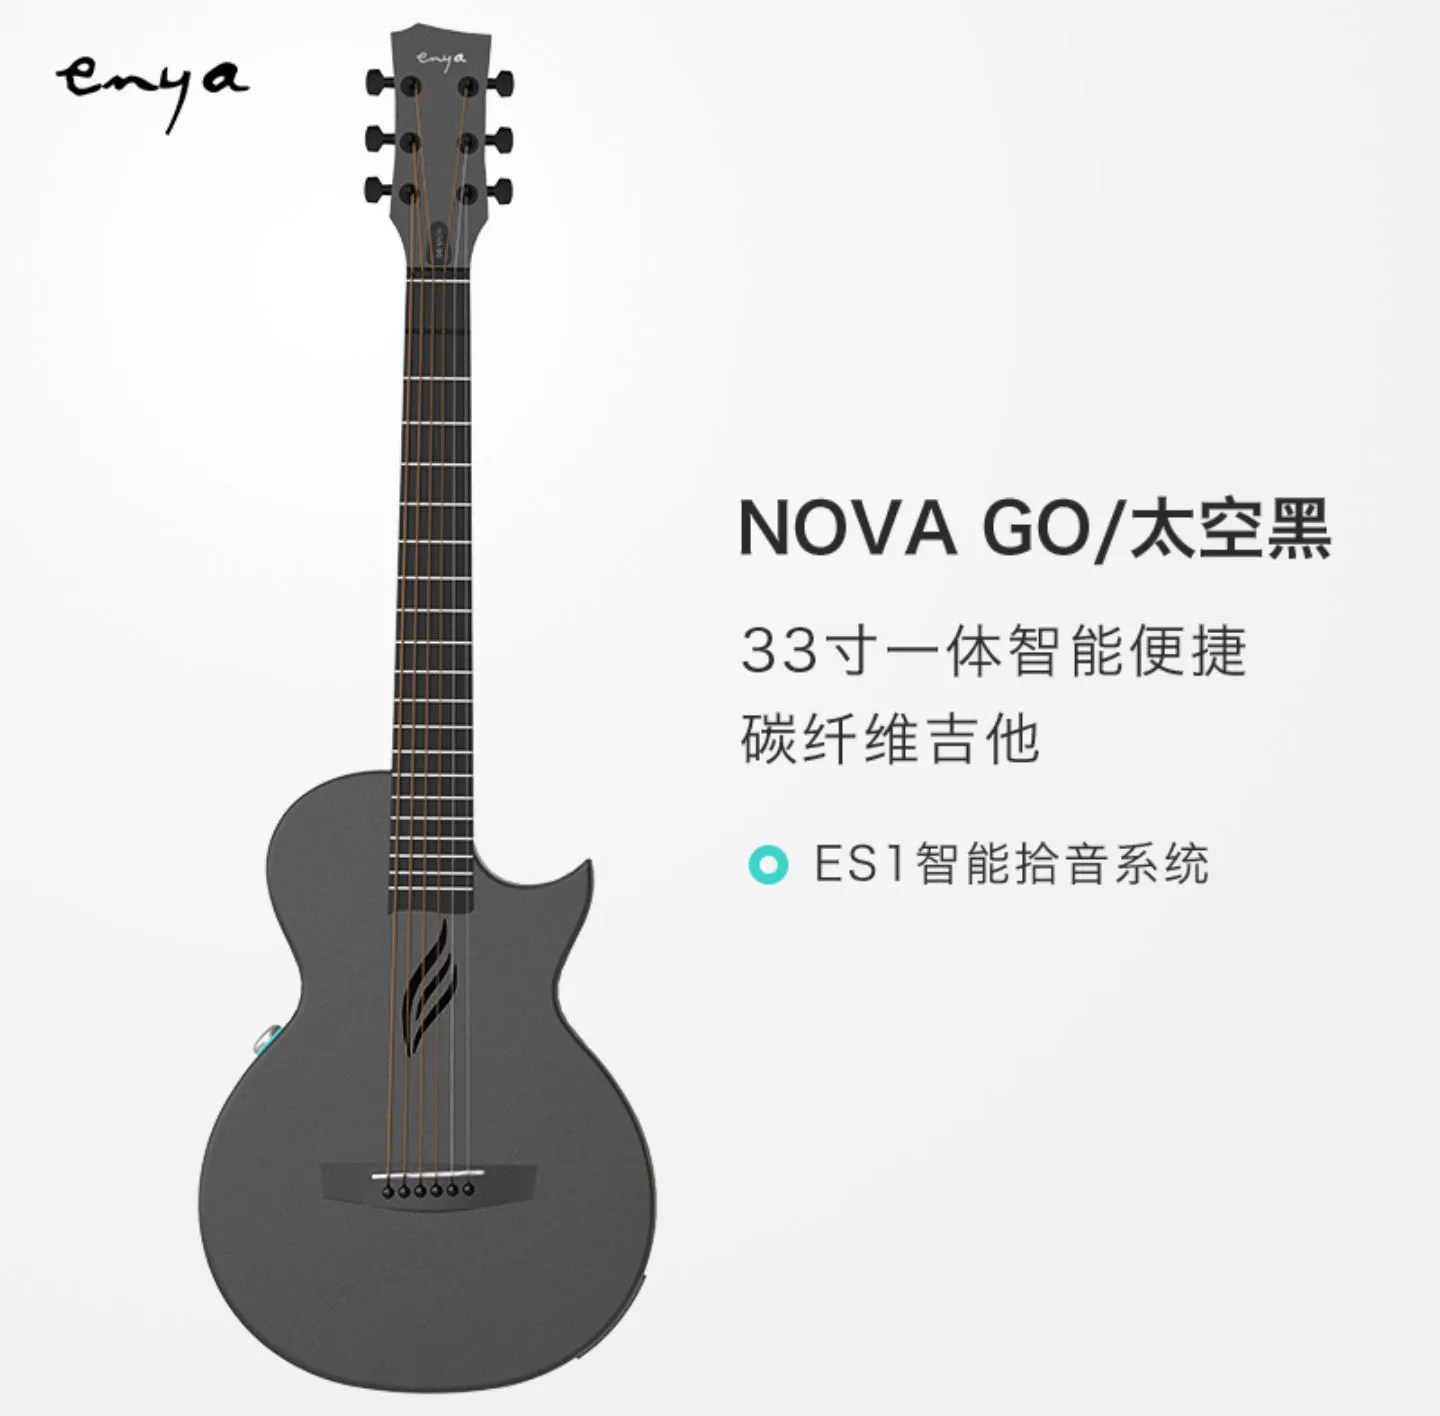 Enya Guitar Nova Go Acoustic Carbon Fiber One Body 33 Inches 